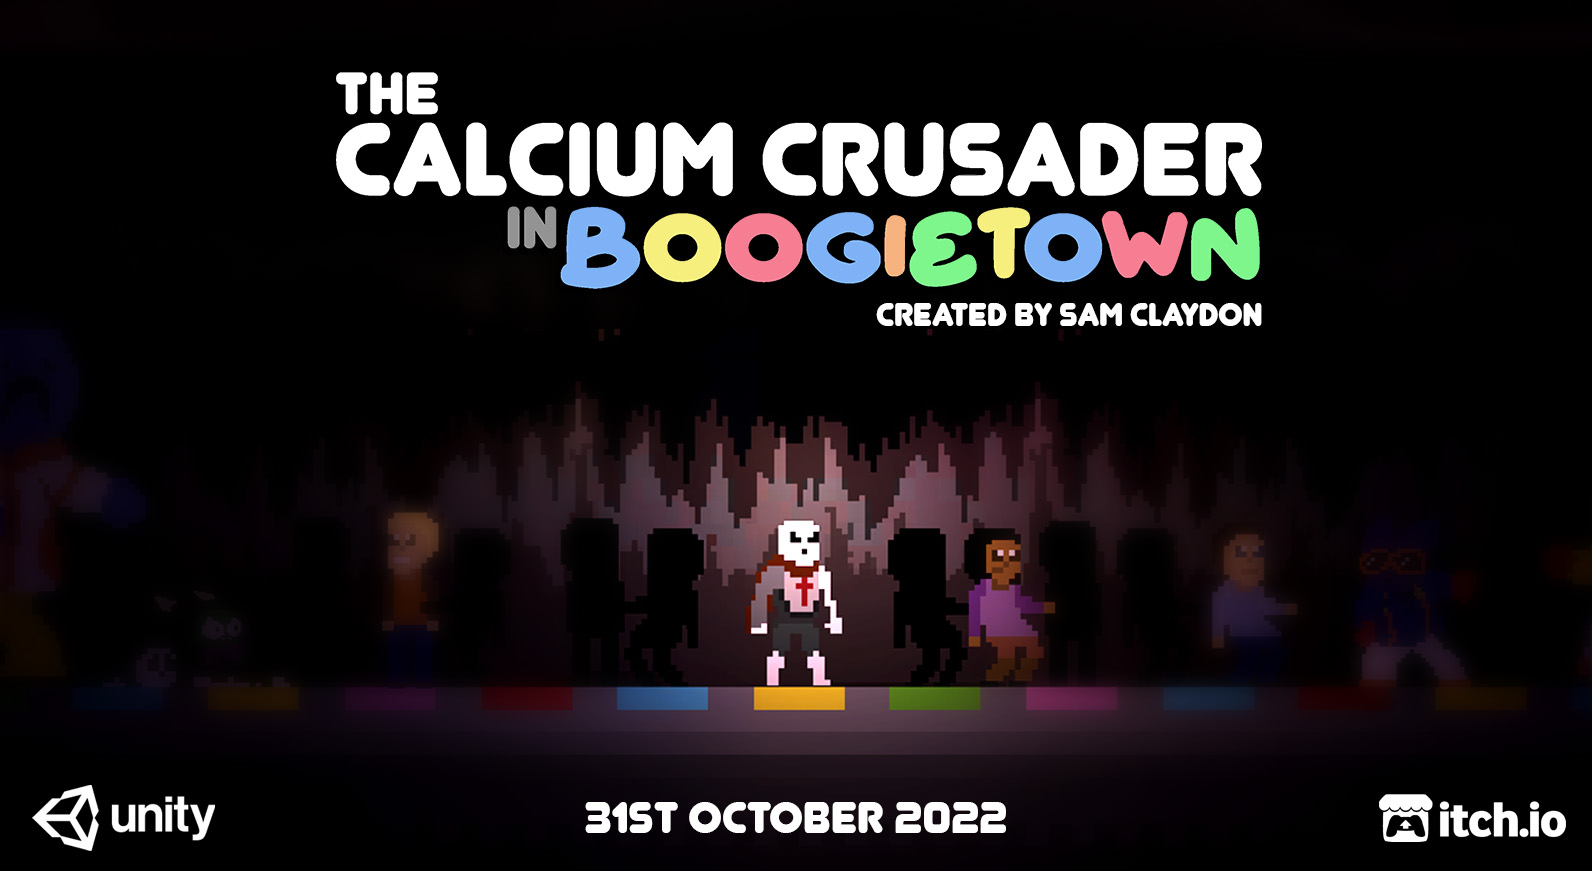 The Calcium Crusader in Boogietown